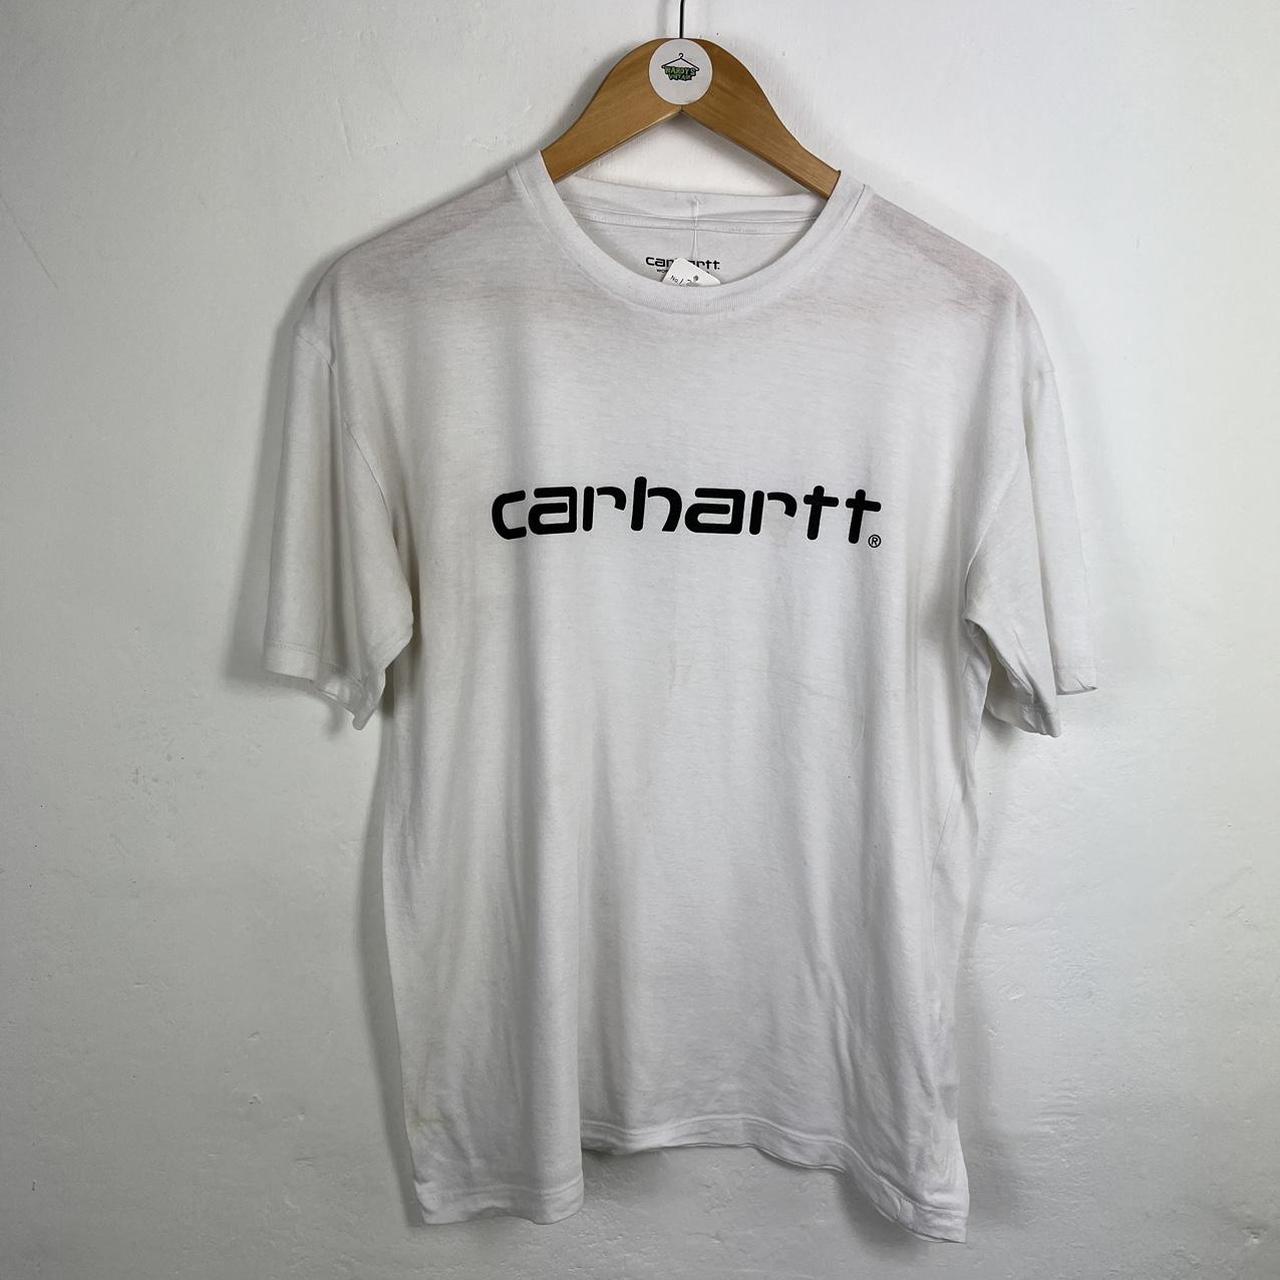 Carhartt t shirt small